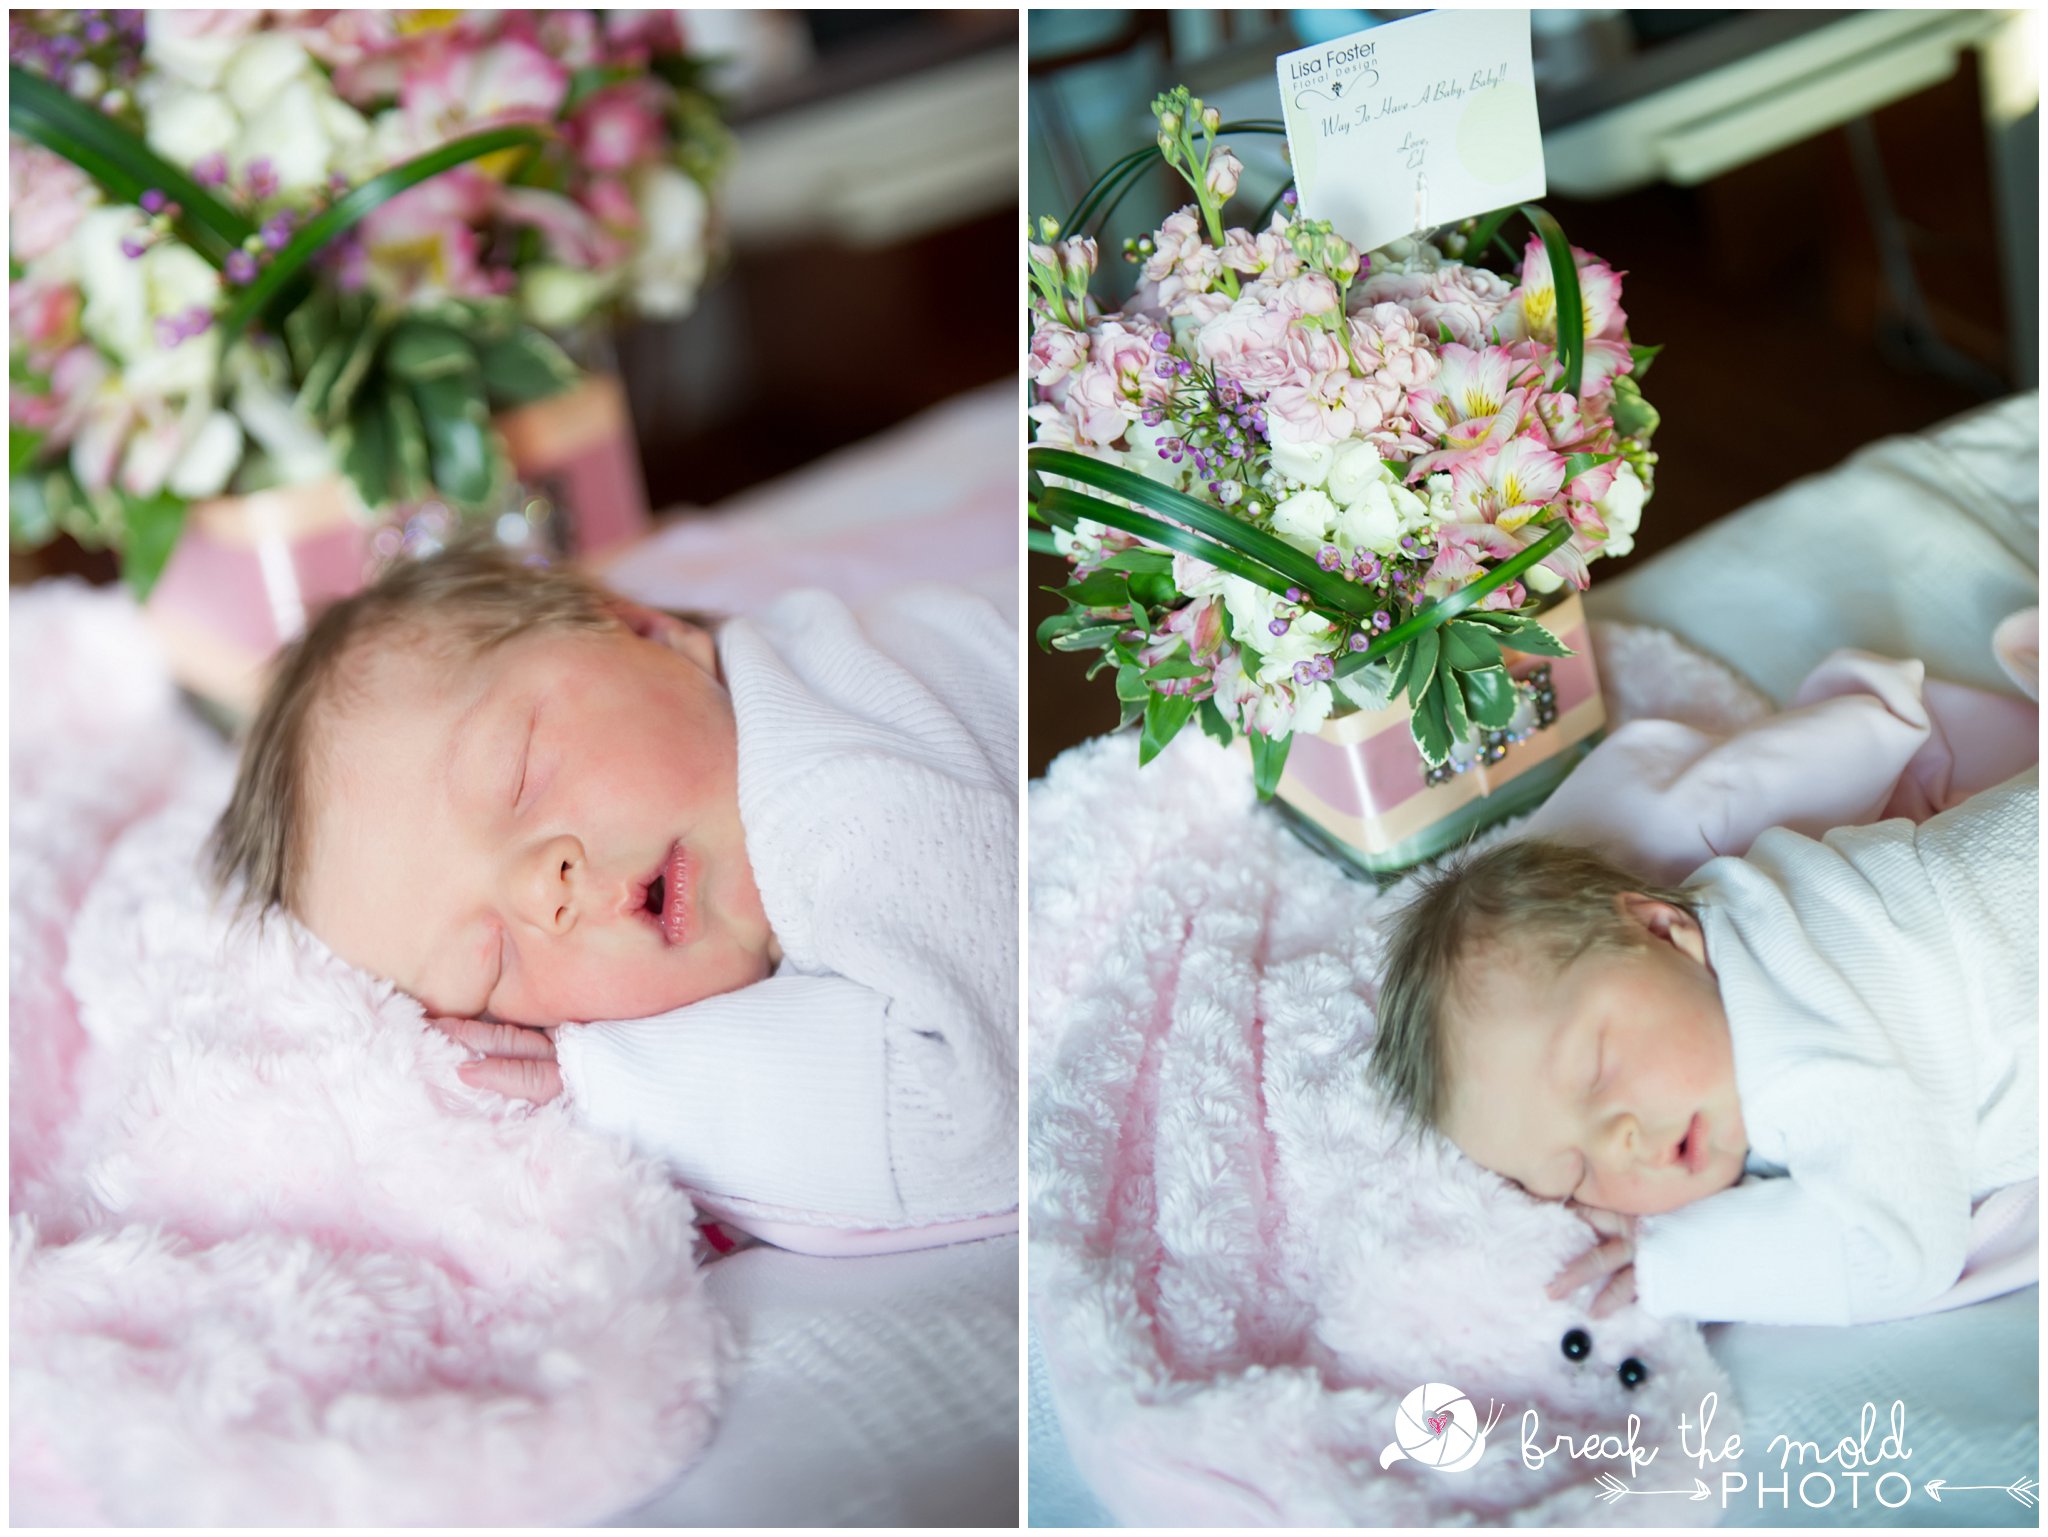 fresh-24-newborn-in-hospital-break-the-mold-photo-baby-girl-sweet-in-room-photos (30).jpg